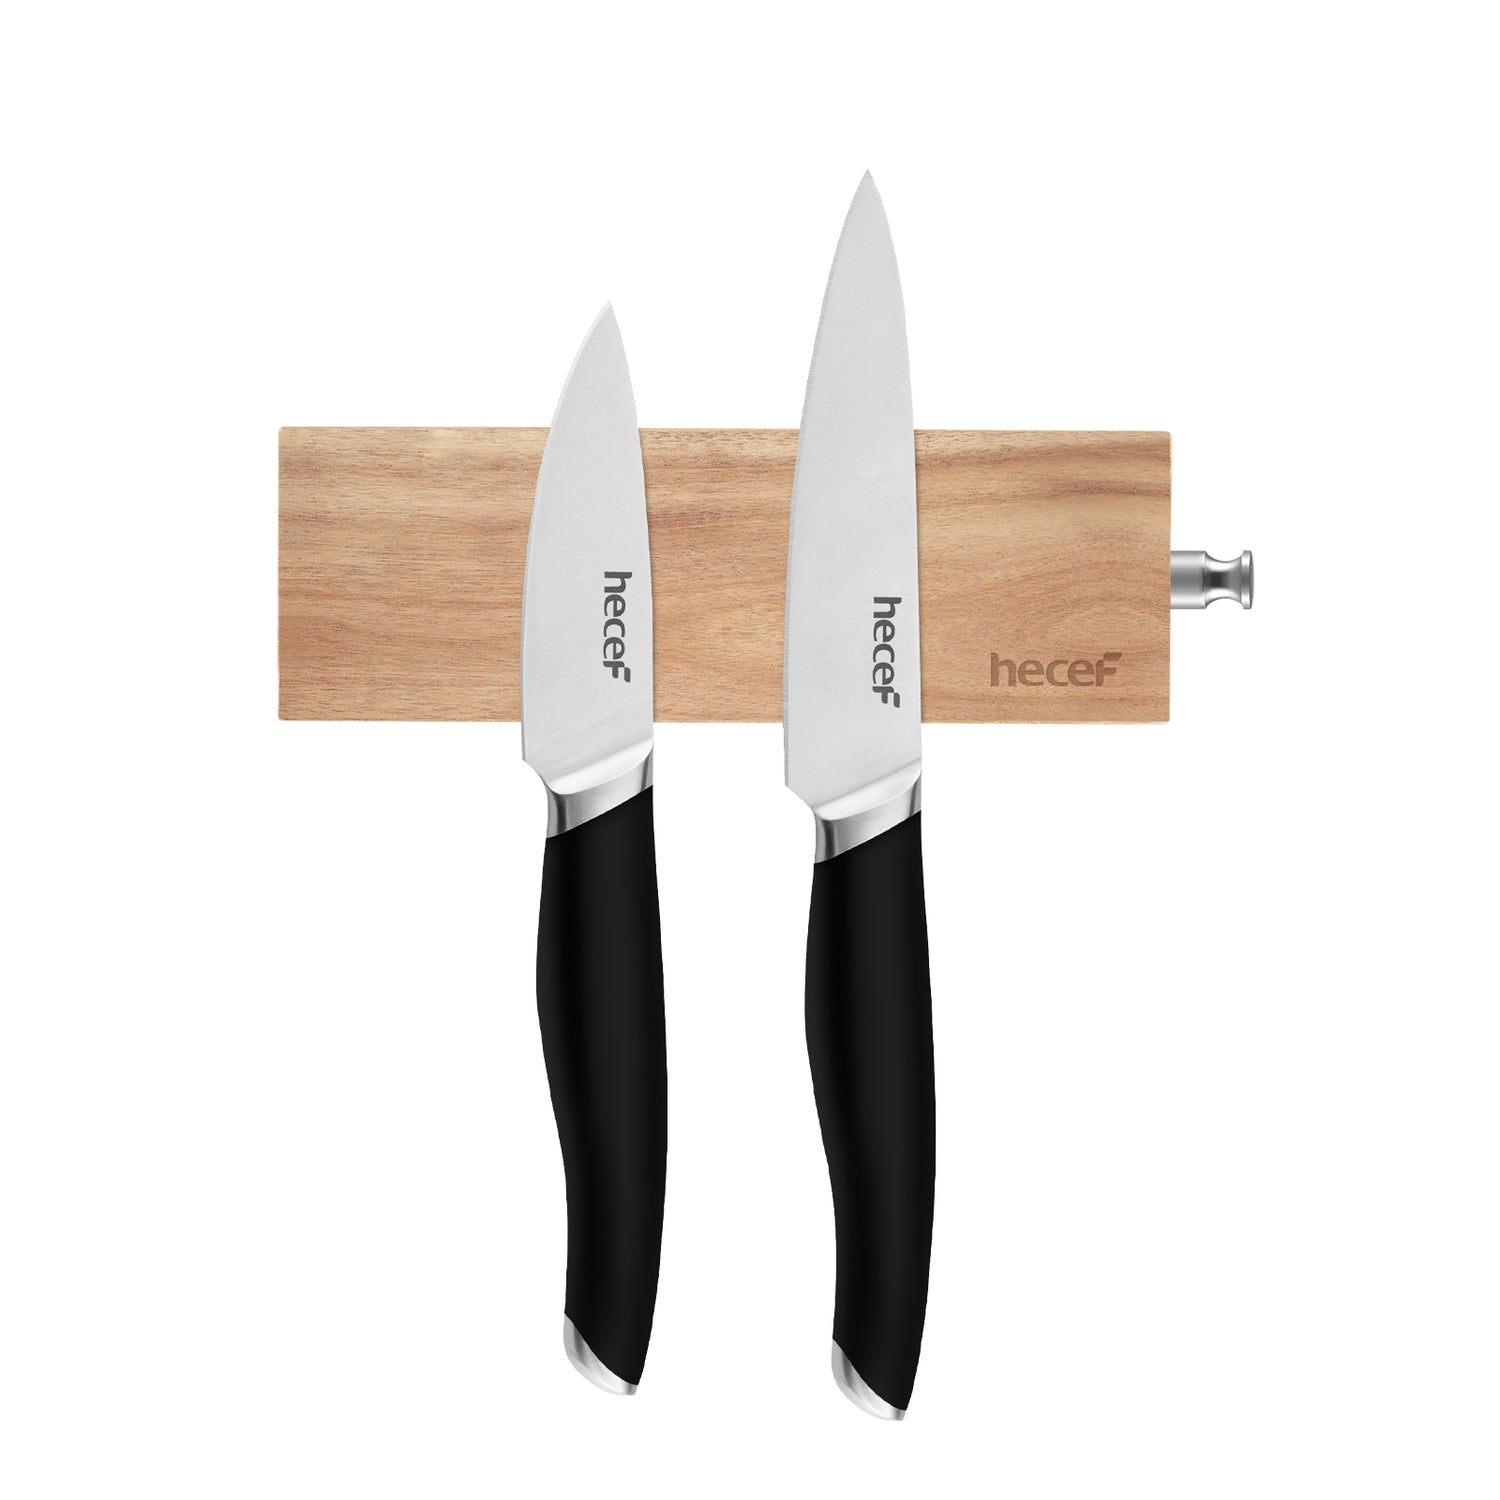 Hecef Kitchen Acacia Wooden Magnetic Knife Holder 6/12 Inch - Hecef Kitchen